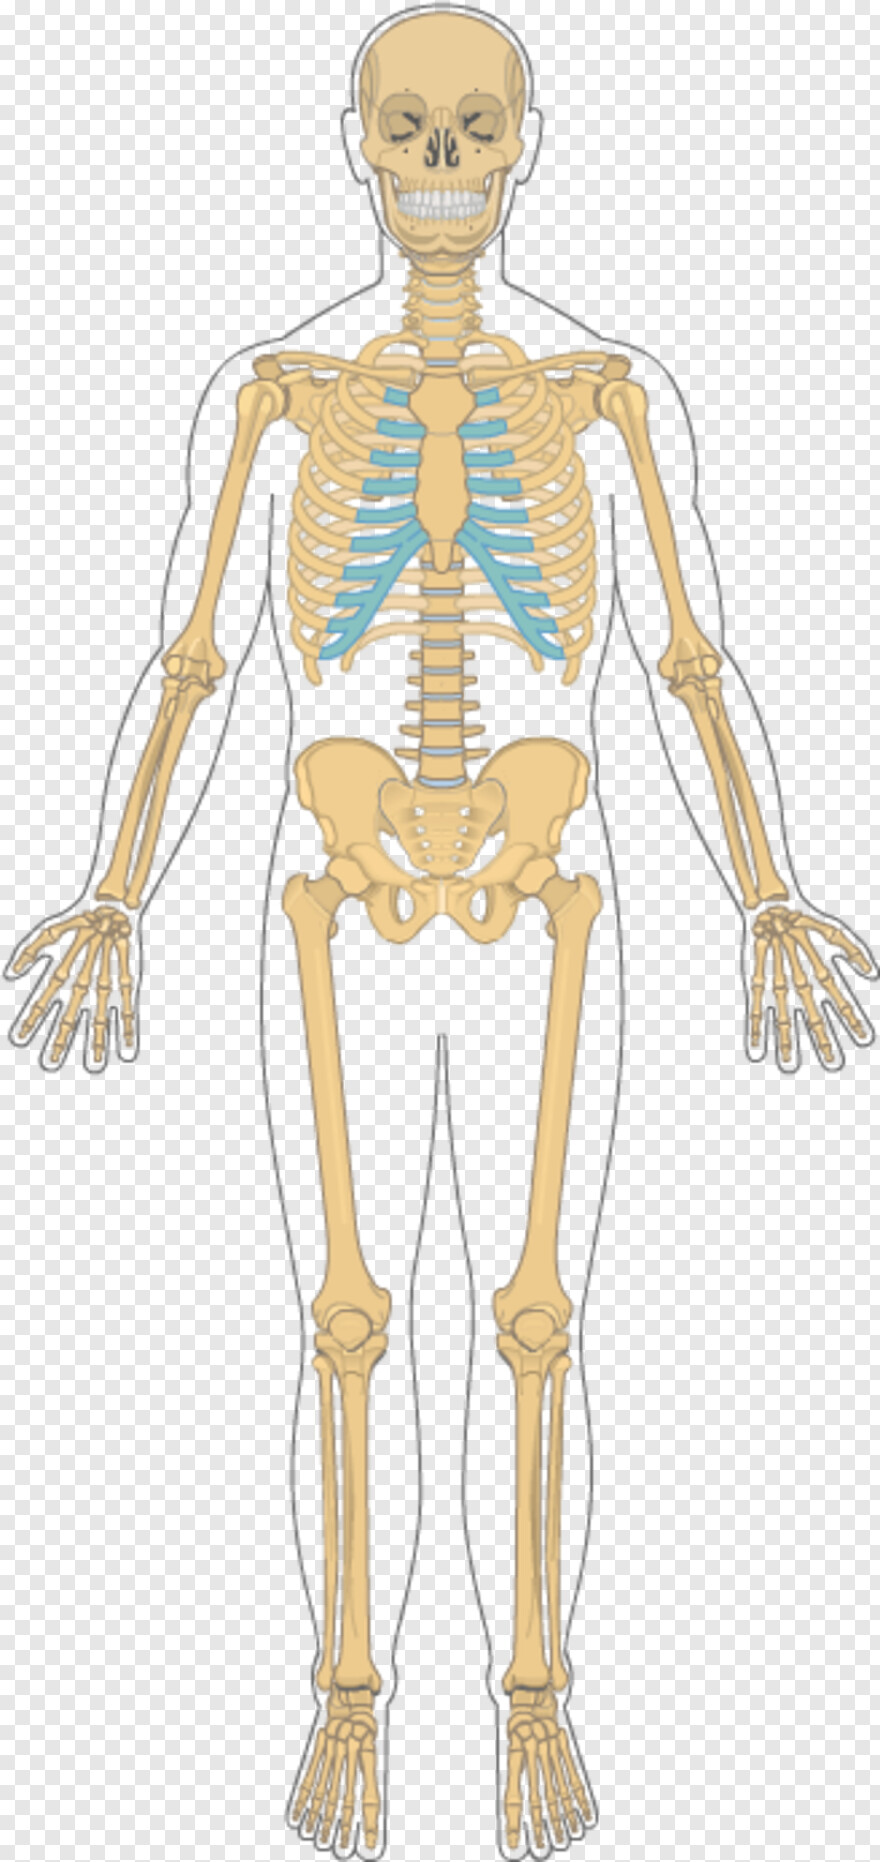  Skeleton Key, Skeleton Head, Skeleton, Paid In Full, Skeleton Arm, Skeleton Hand